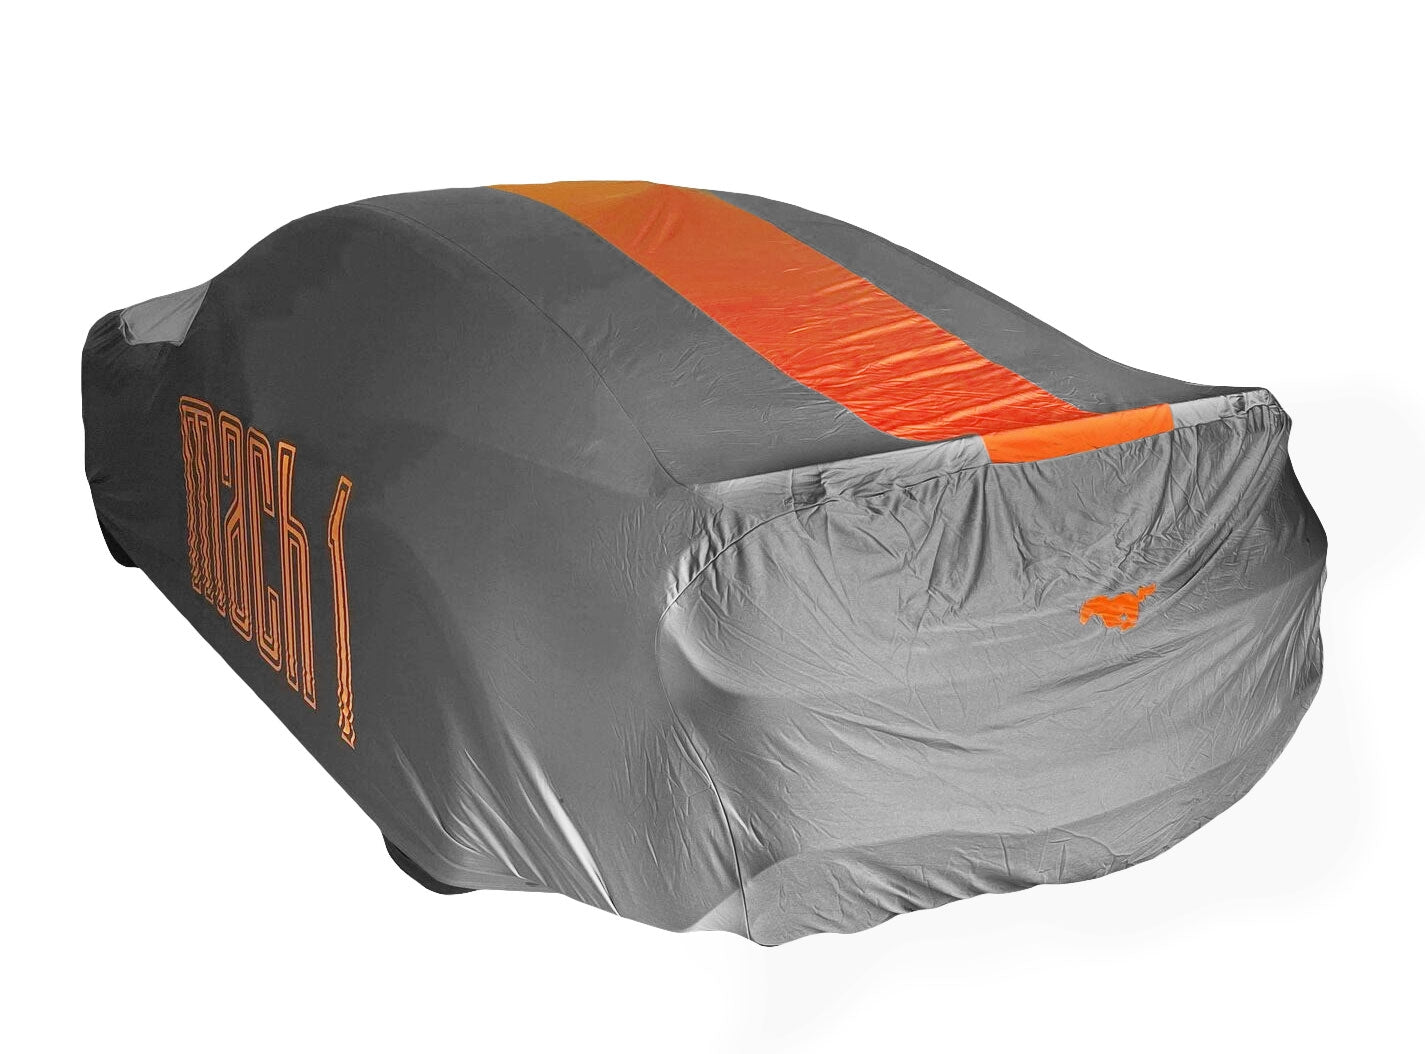 2021 Mustang Mach 1 Low Wing OEM Genuine Ford Indoor Car Cover Grey & Orange